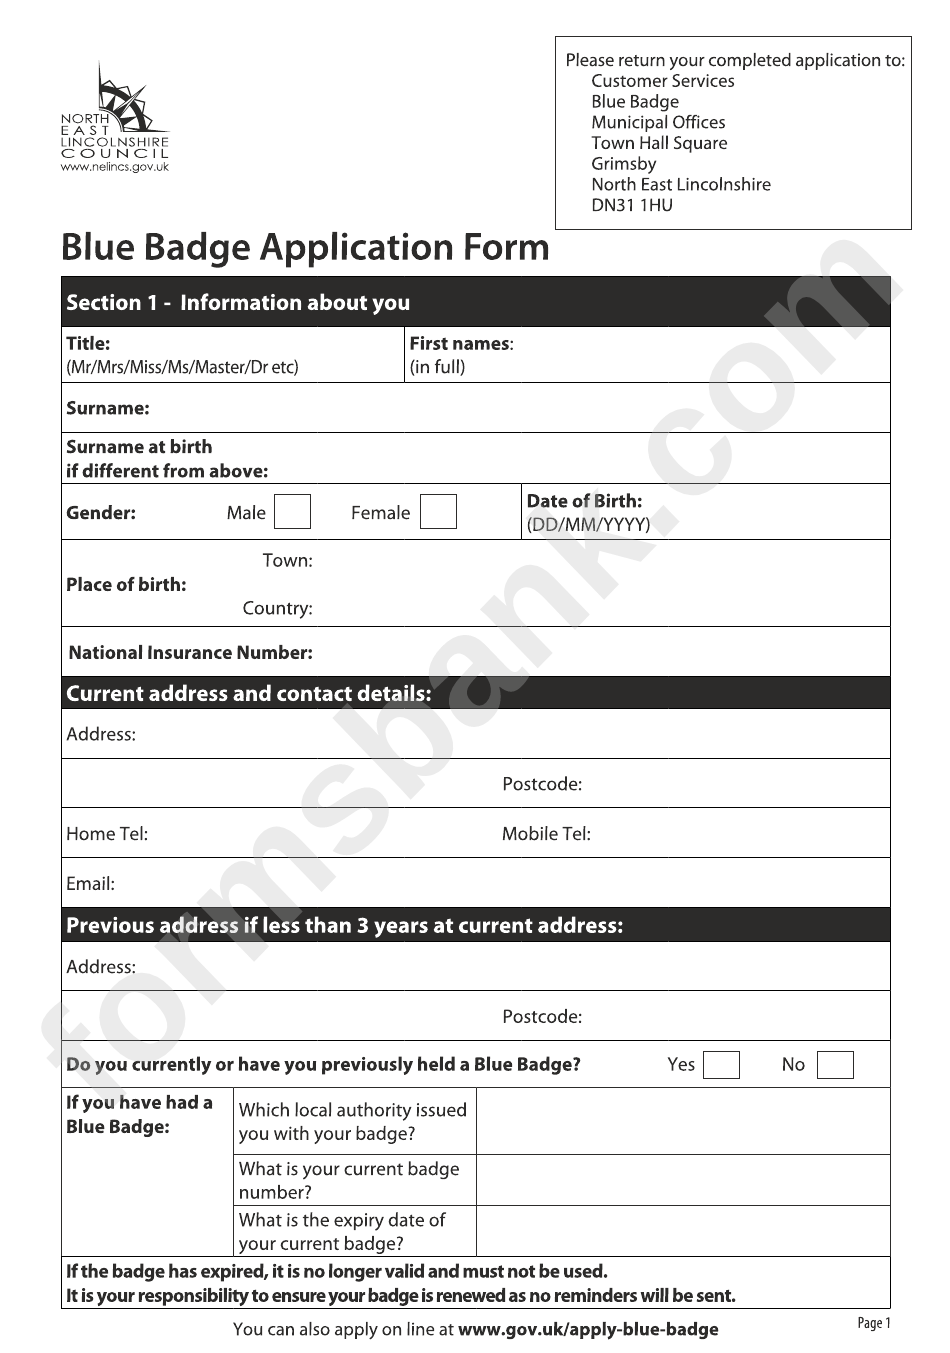 blue-badge-application-form-customer-services-blue-badge-printable